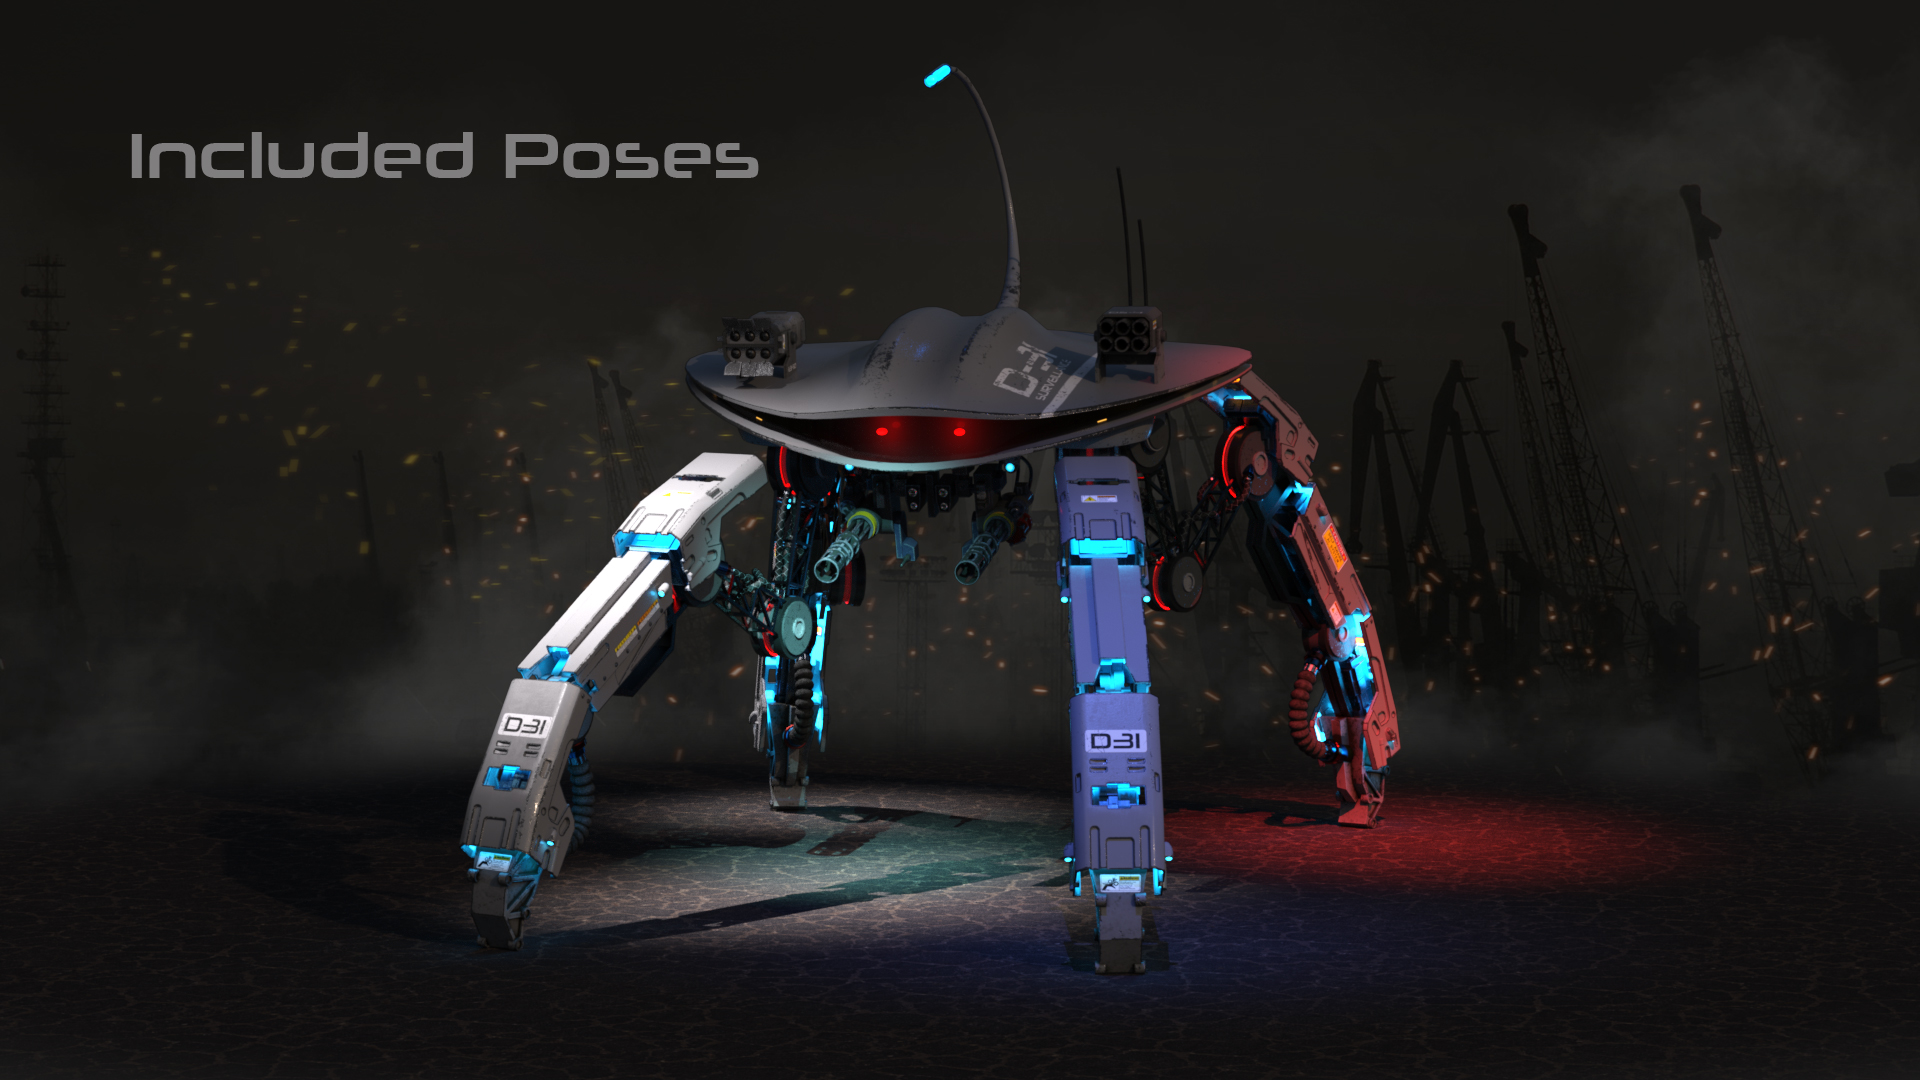 D-31 Surveillance Drone by: DarkEdgeDesign, 3D Models by Daz 3D